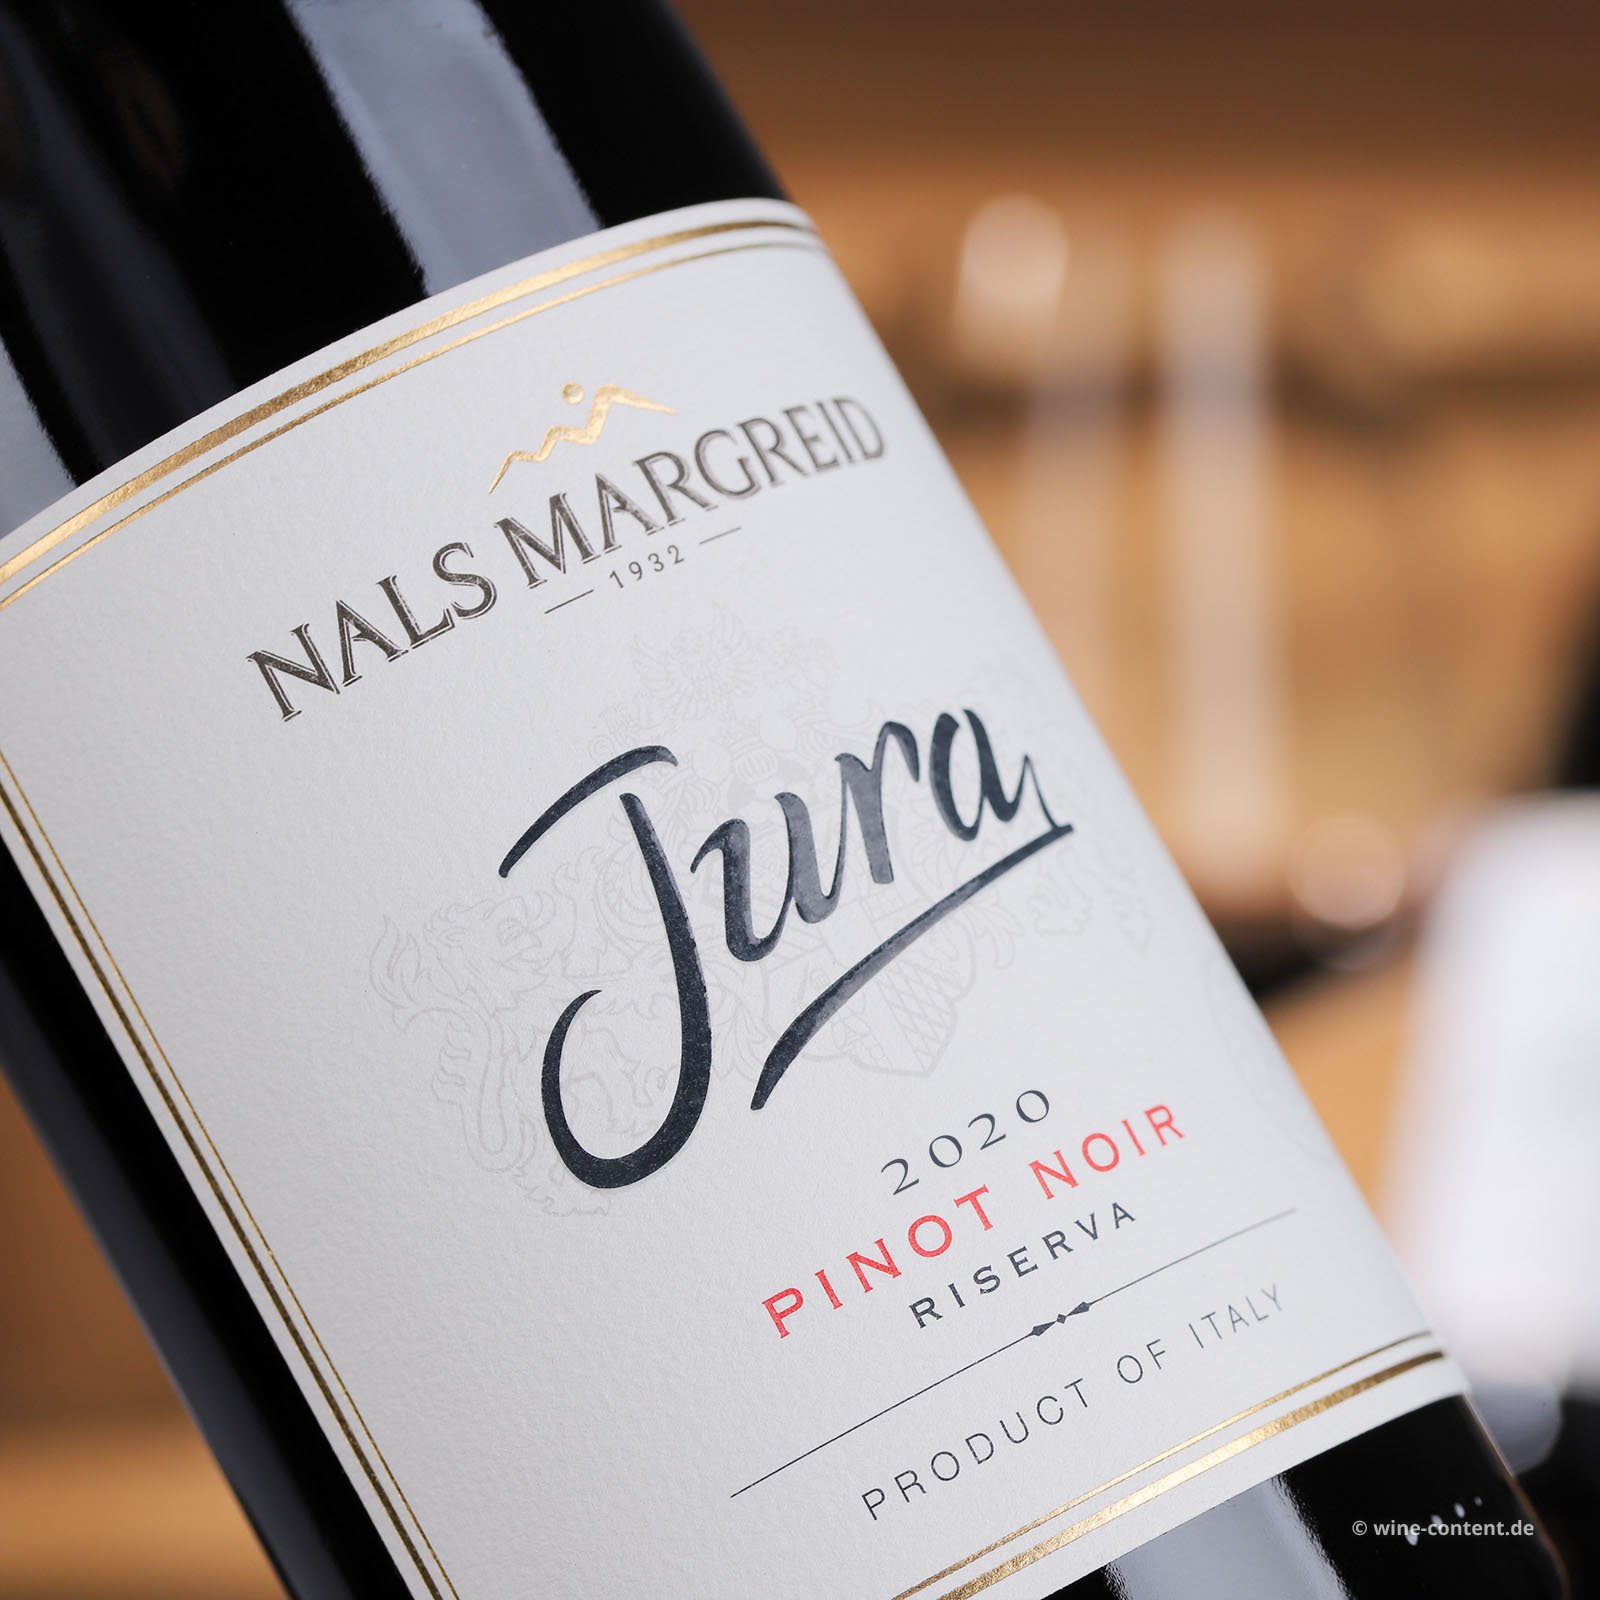 Pinot Noir Riserva 2020 Jura